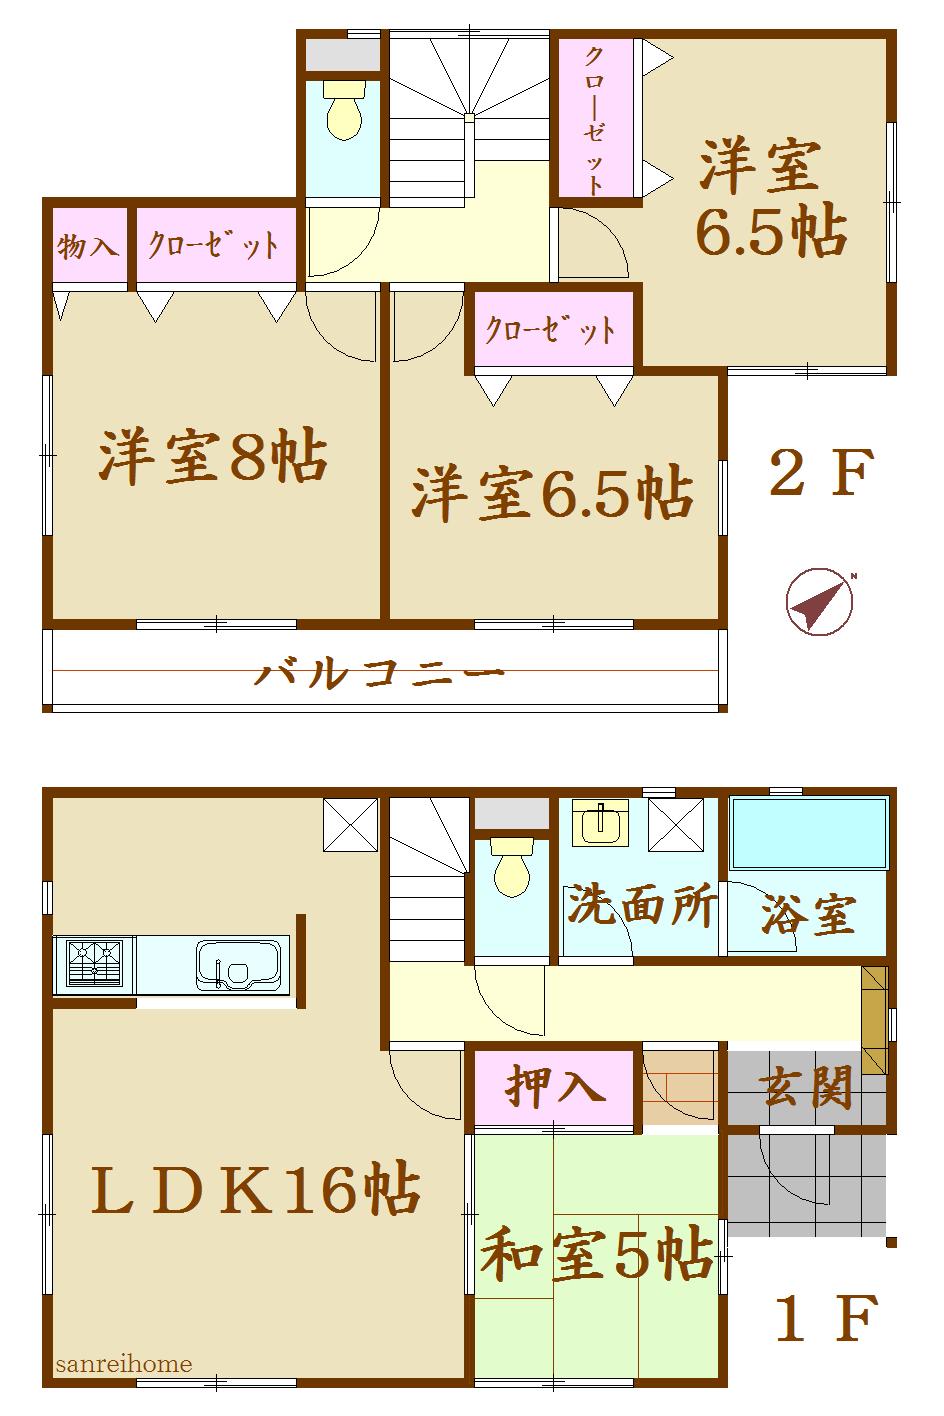 Floor plan. (3 Building), Price 19.9 million yen, 4LDK, Land area 264.97 sq m , Building area 98.01 sq m